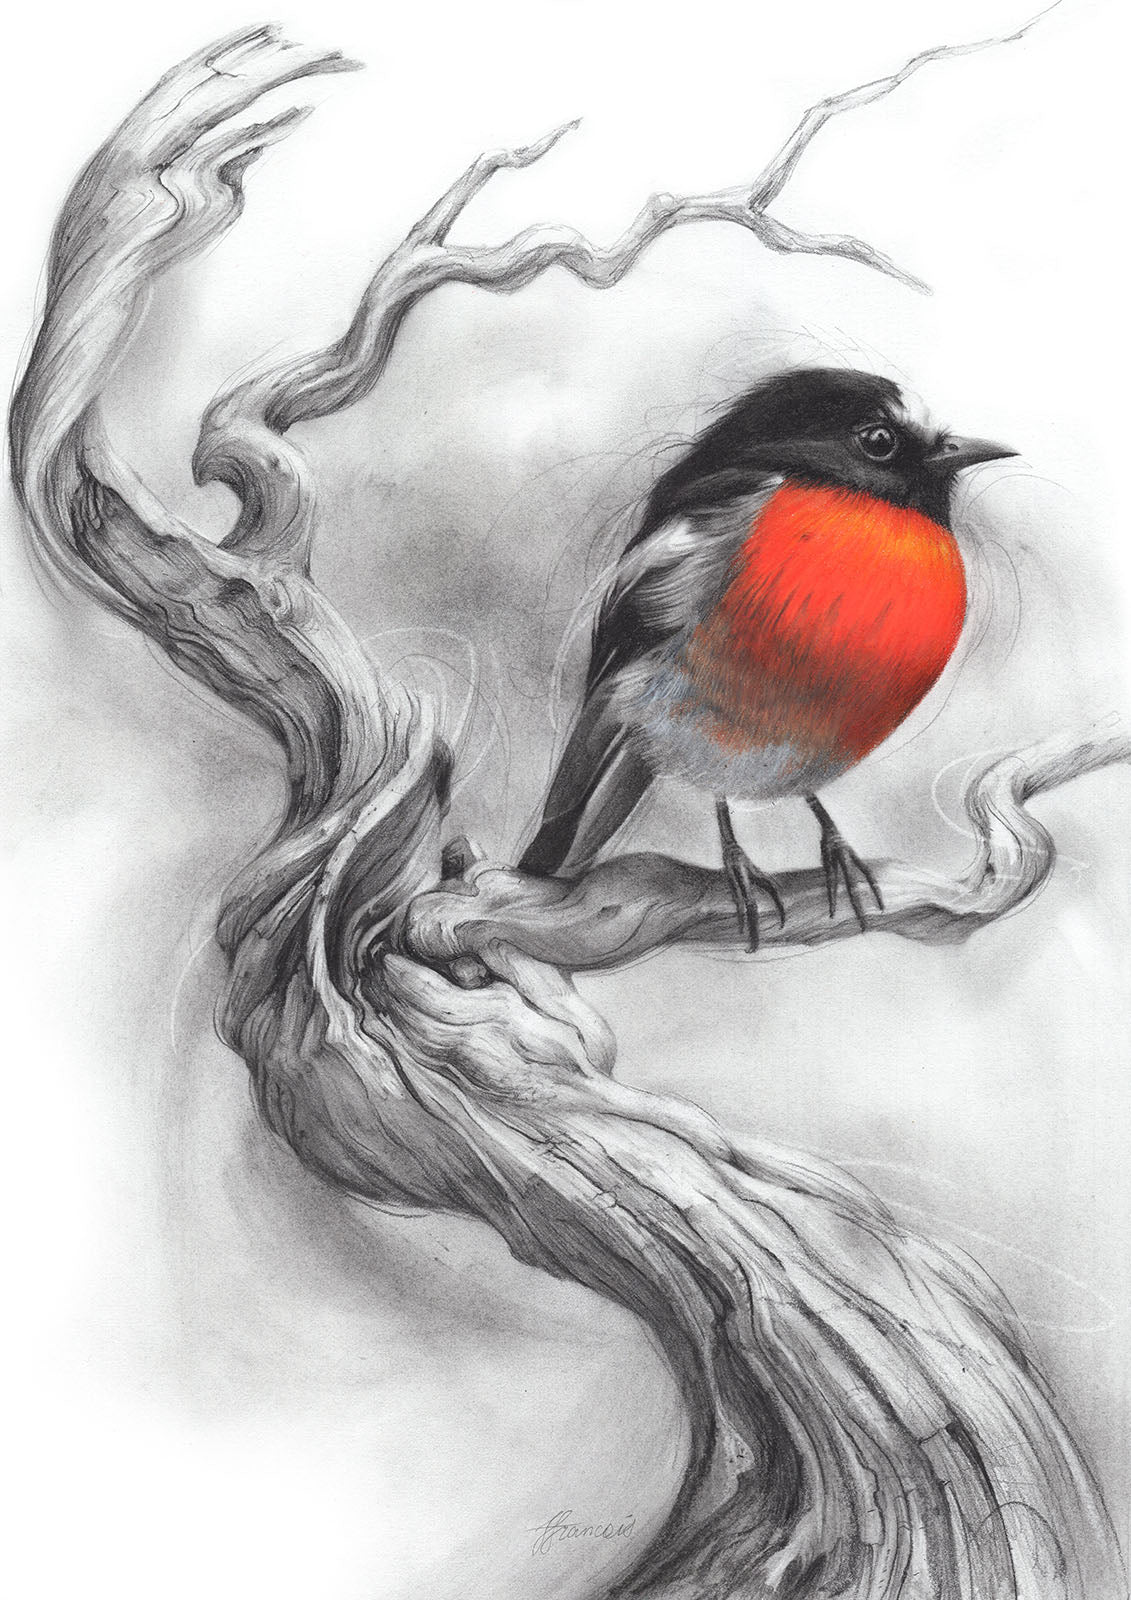 'Scarlet Robin' acrylic print